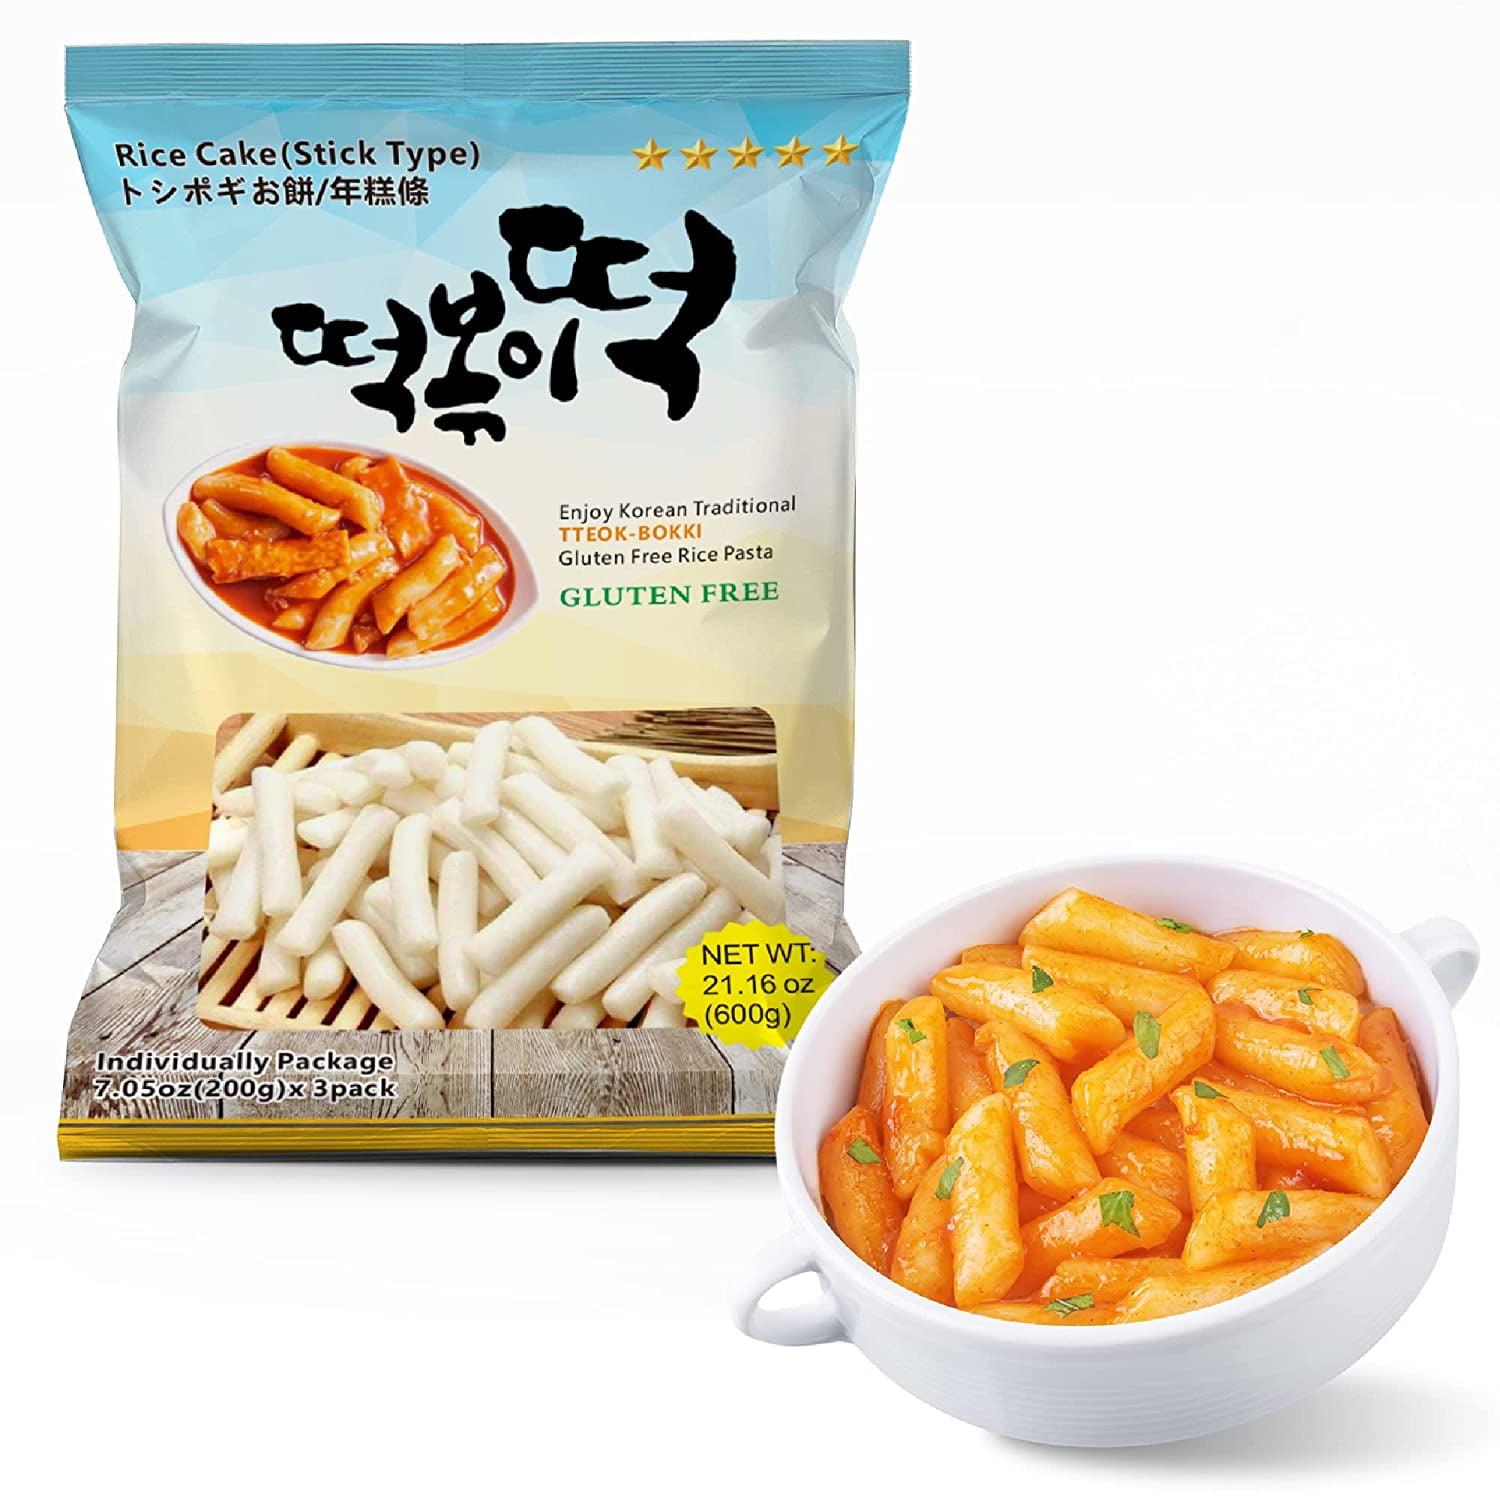 ALDKitchen Korean Rice Cake Maker | Tteokbokki Machine with Nonstick Coating